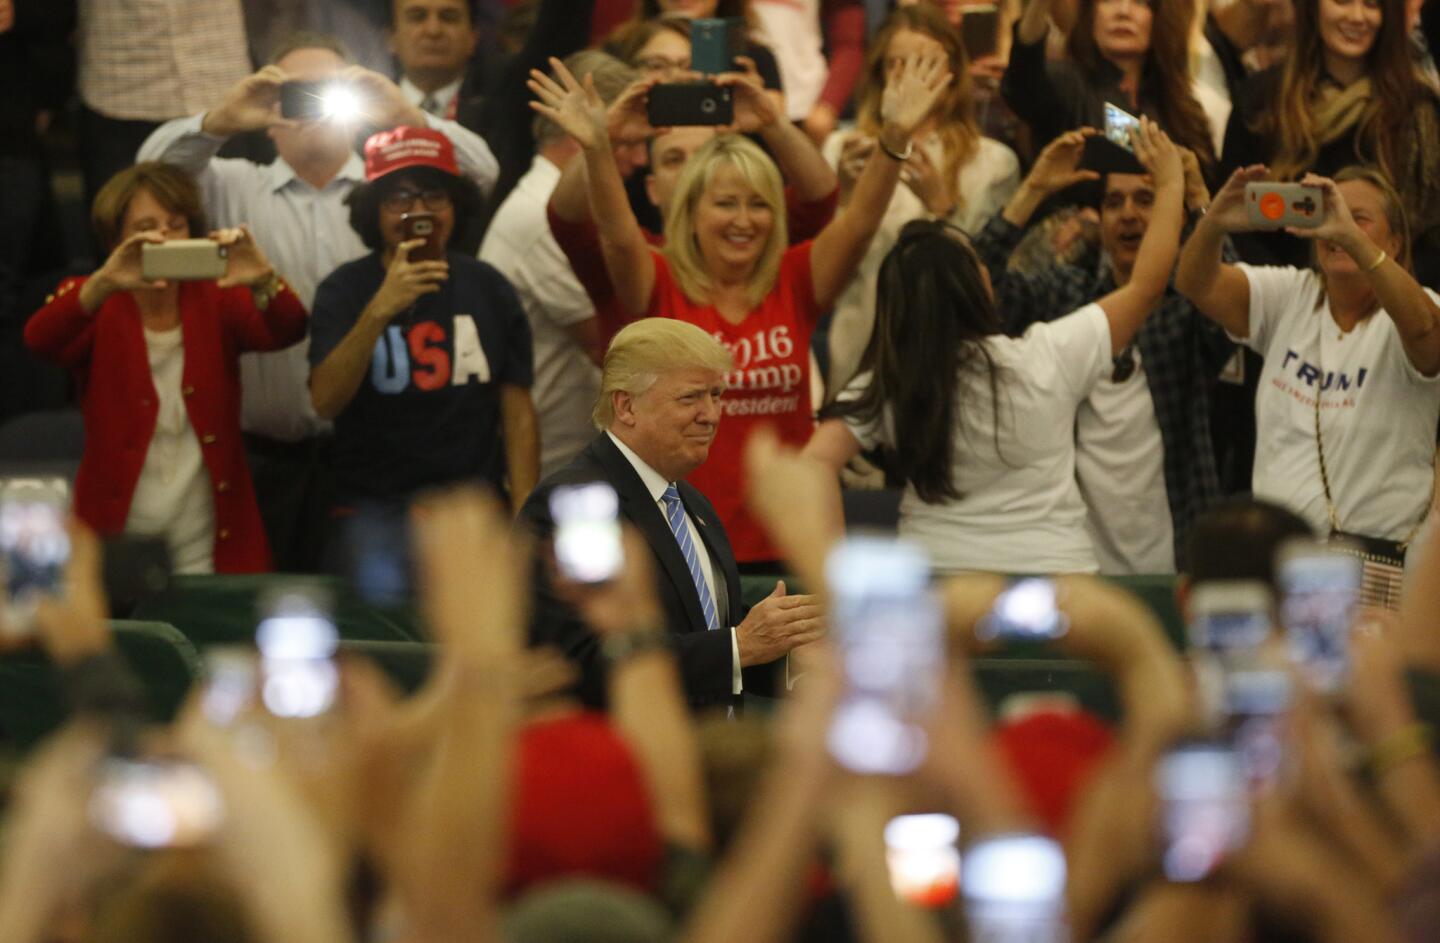 Trump campaign stop in Anaheim